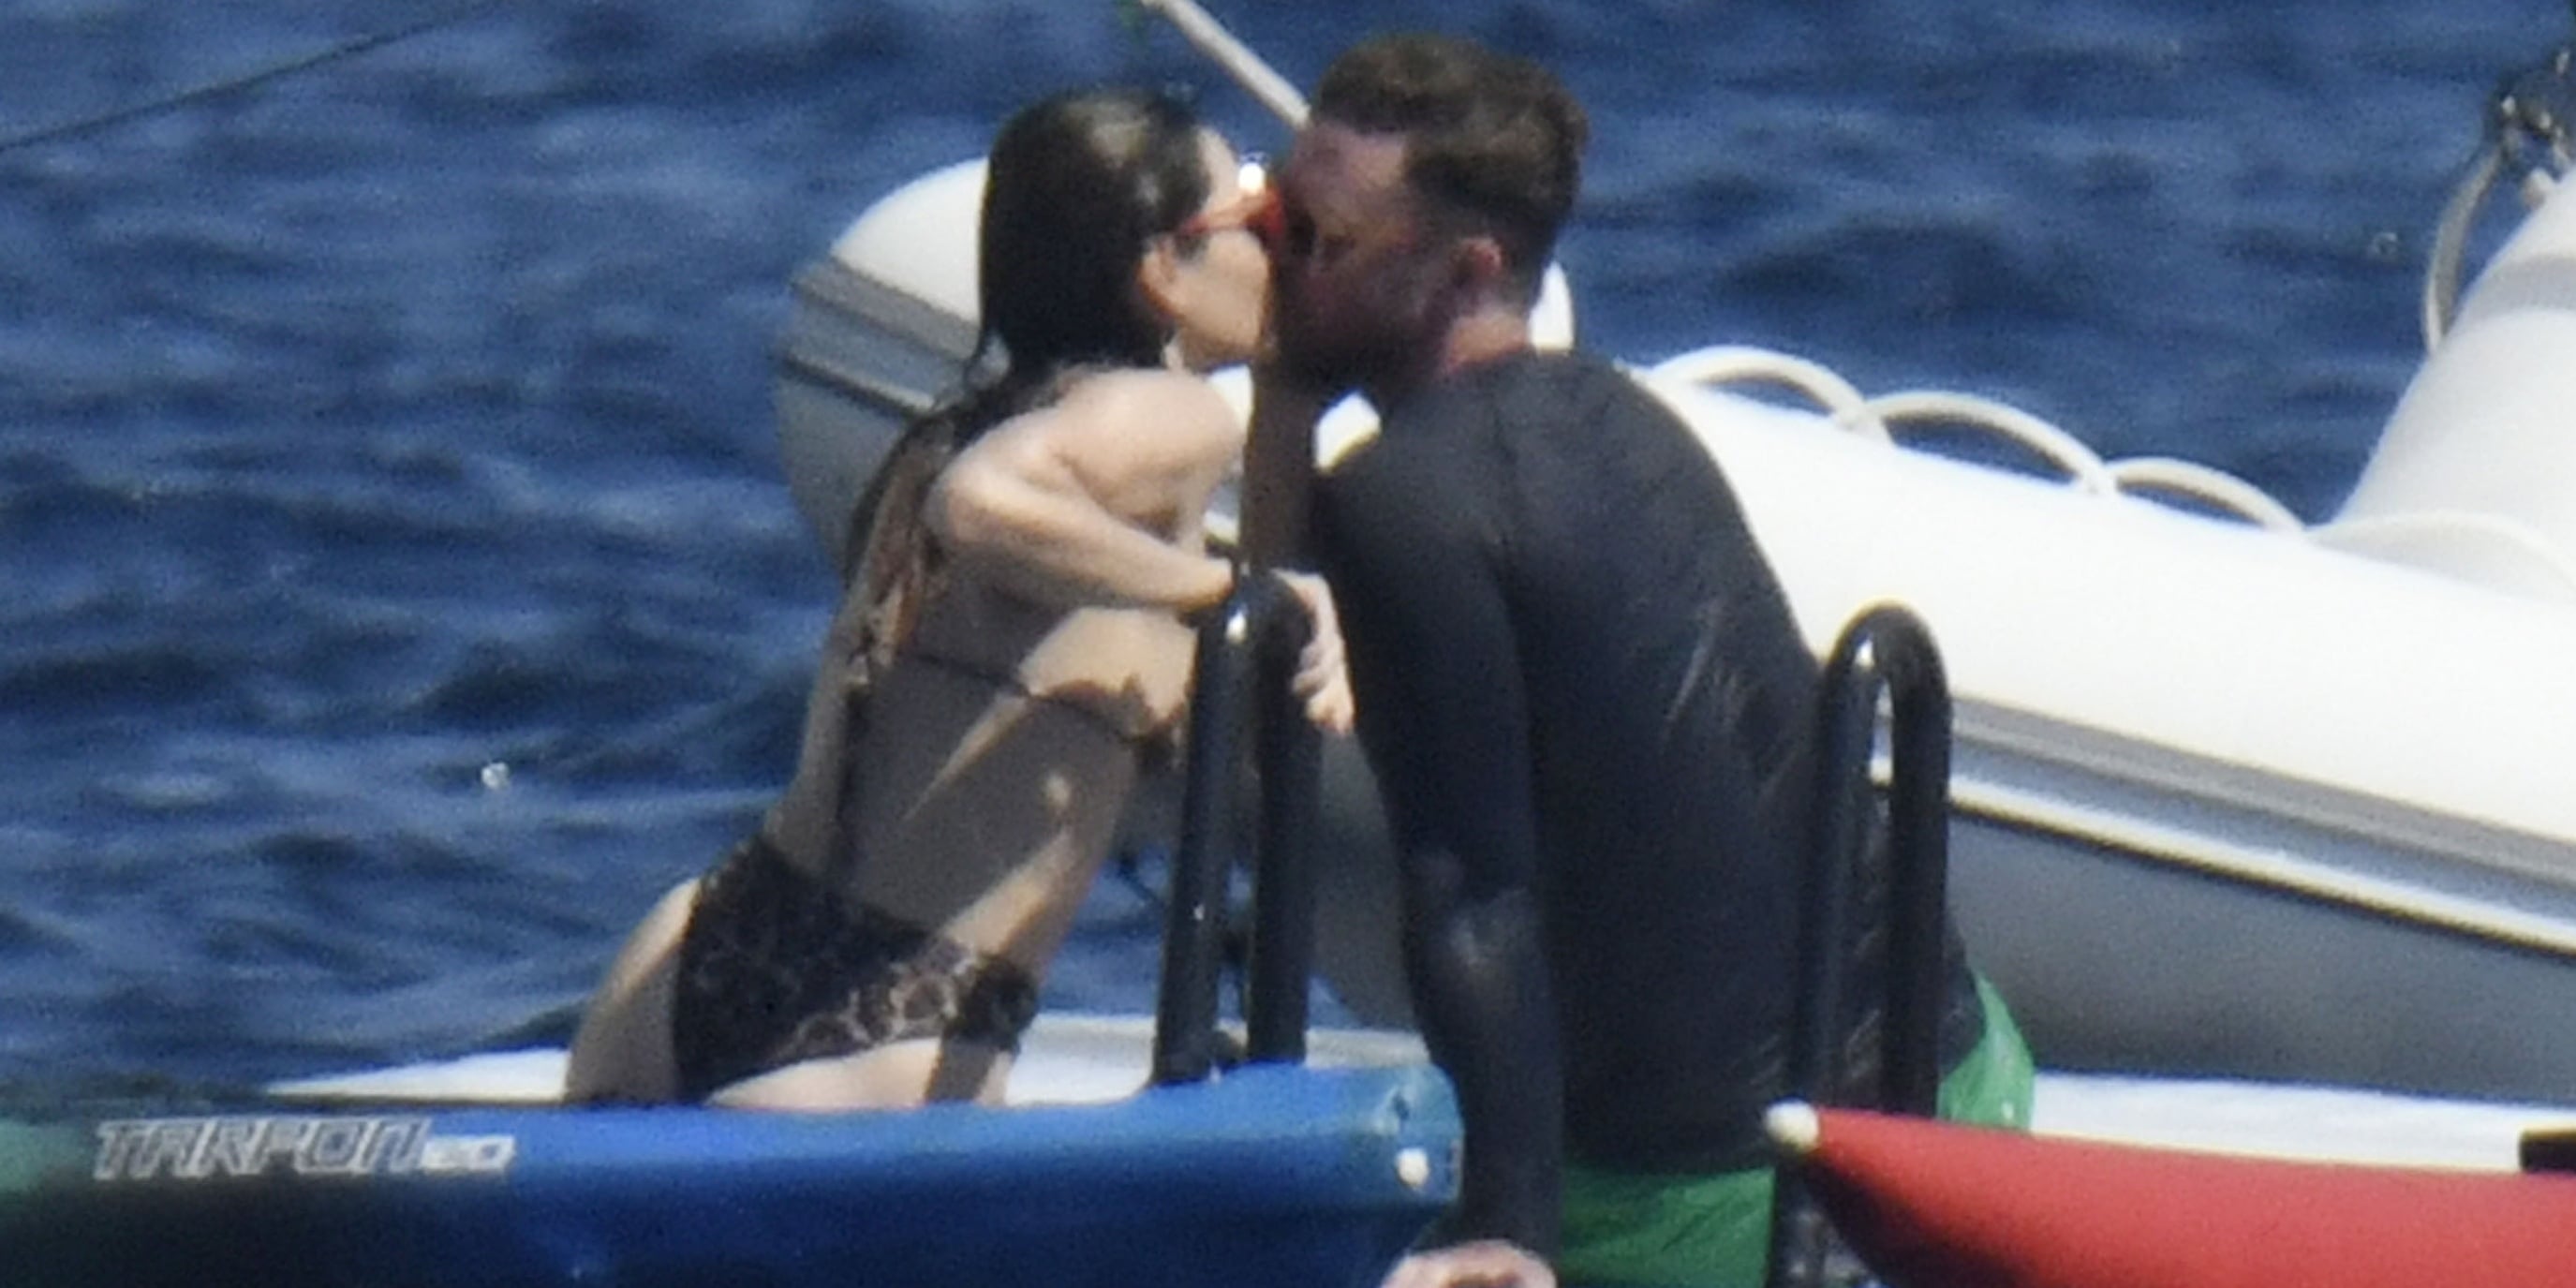 Justin Timberlake & Jessica Biel Slow Dance On Yacht: Photos